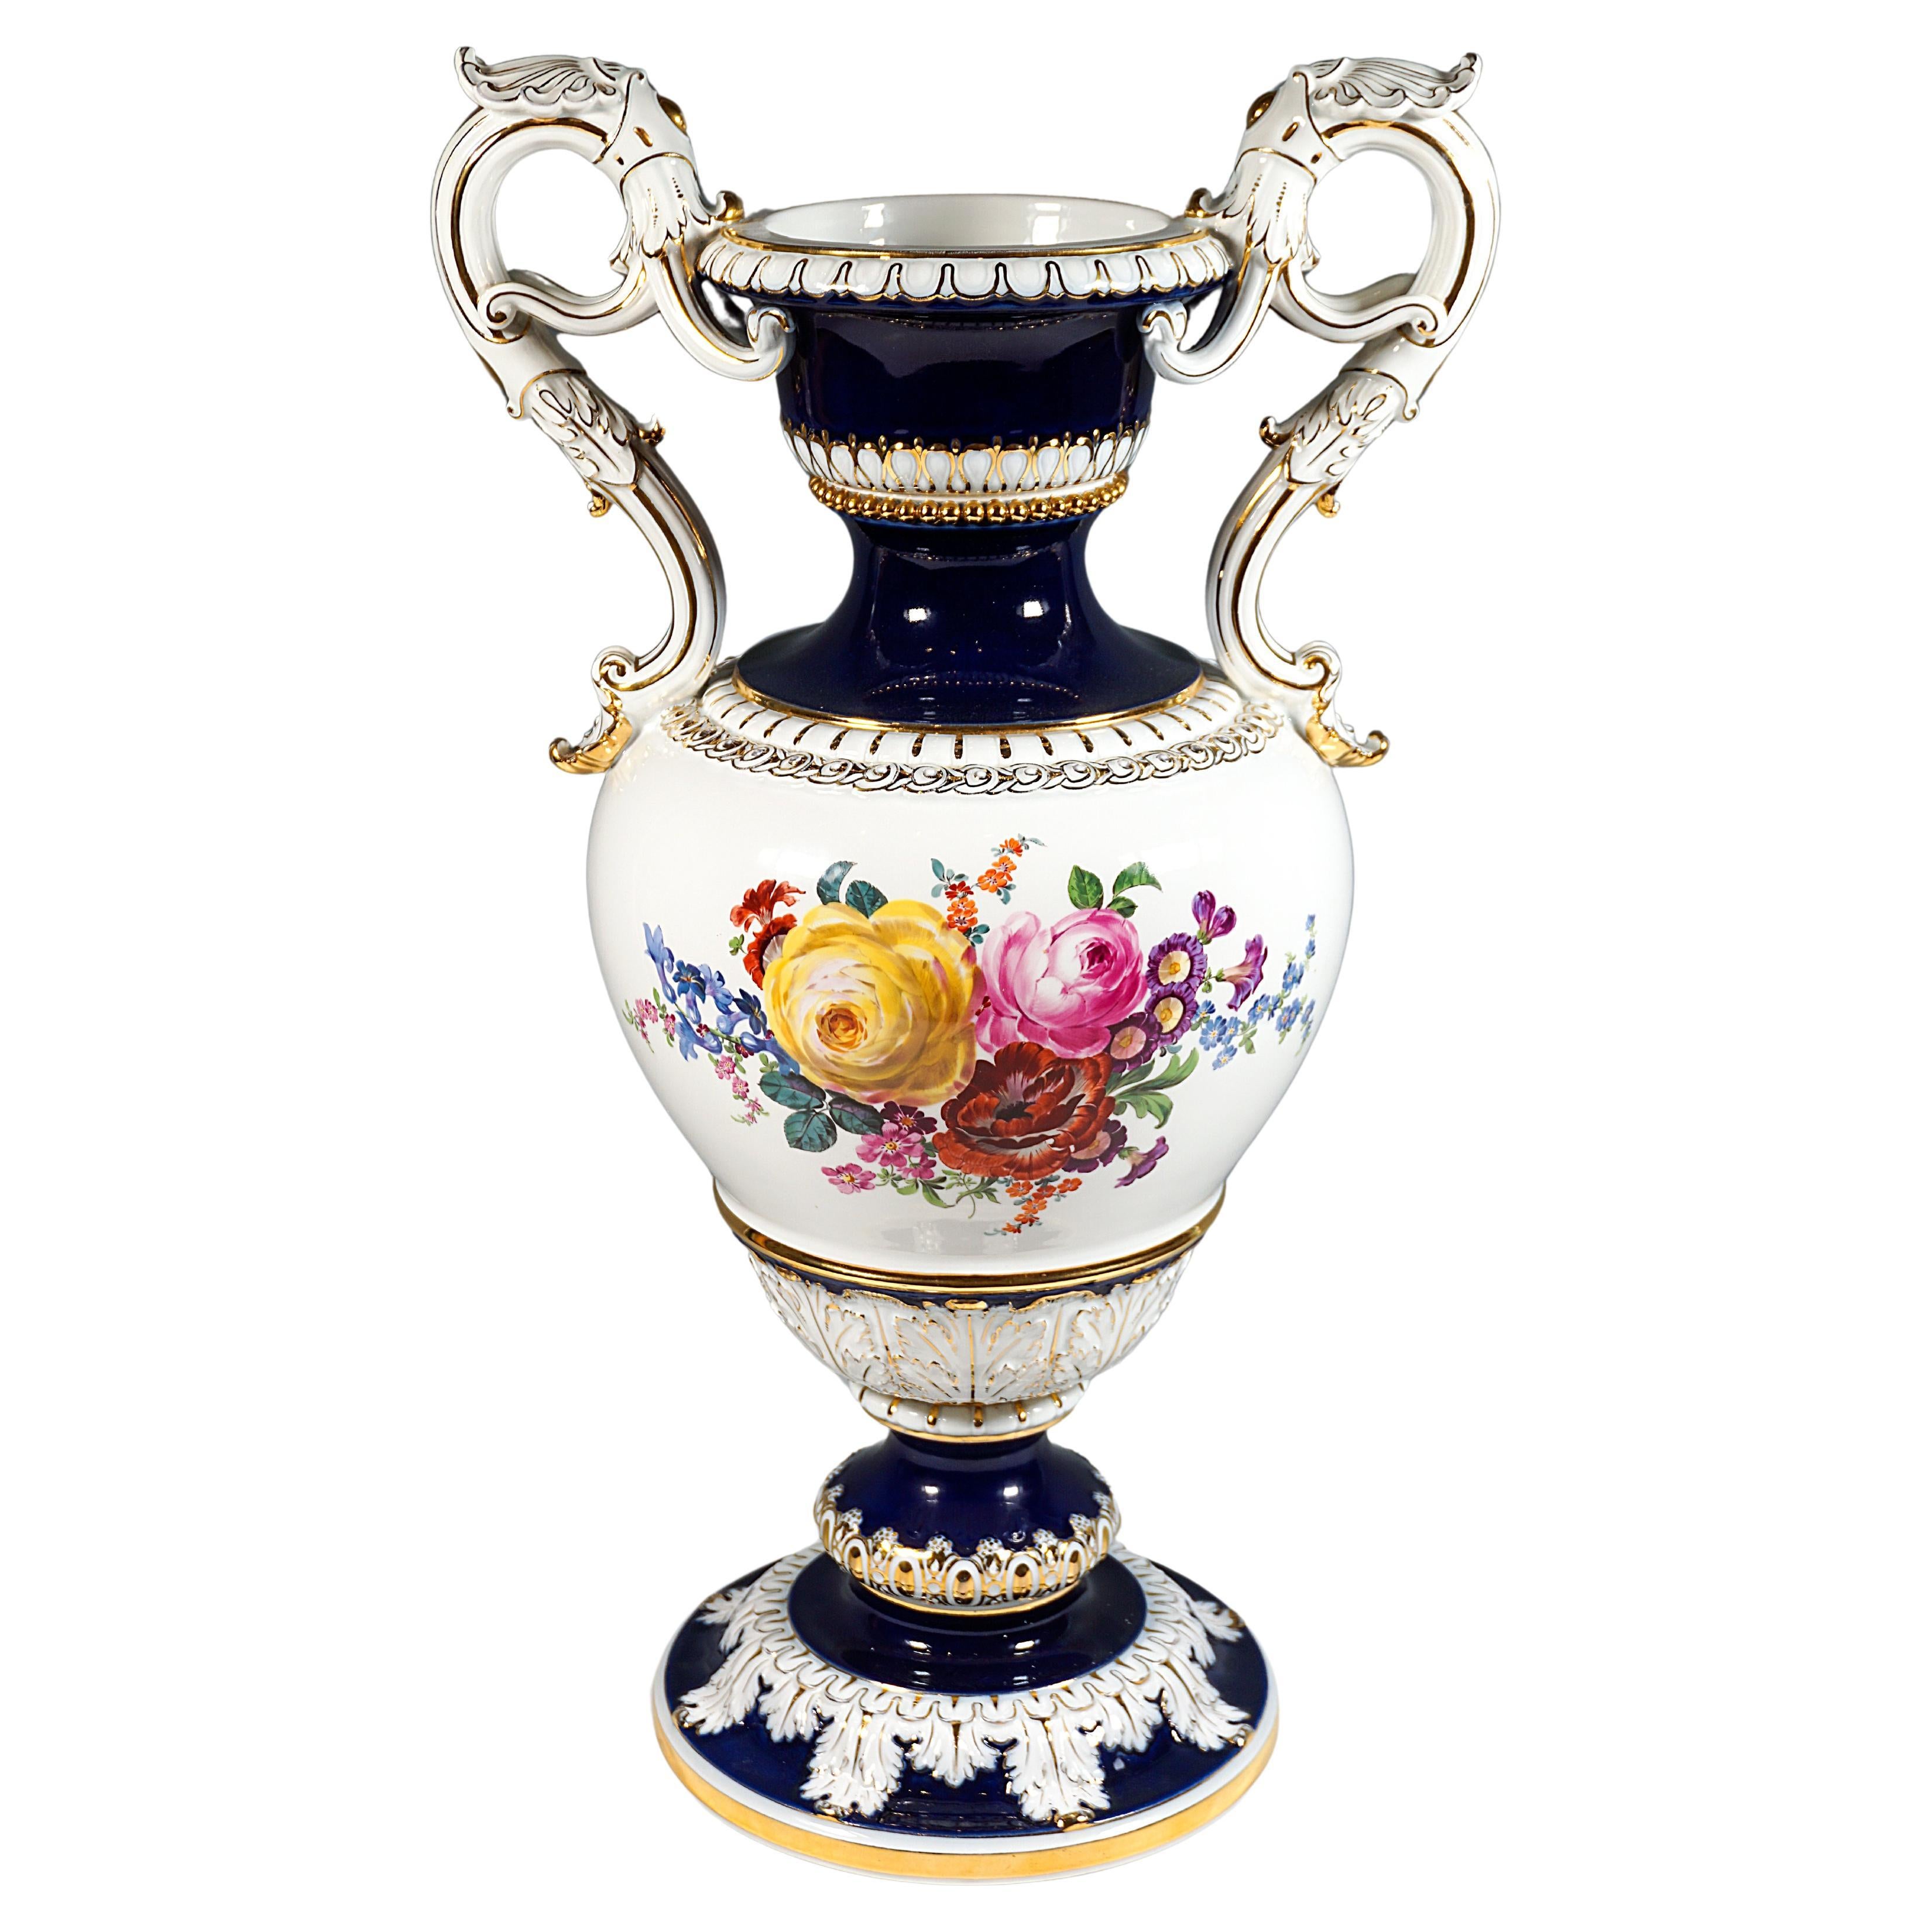 What is a porcelain vase?